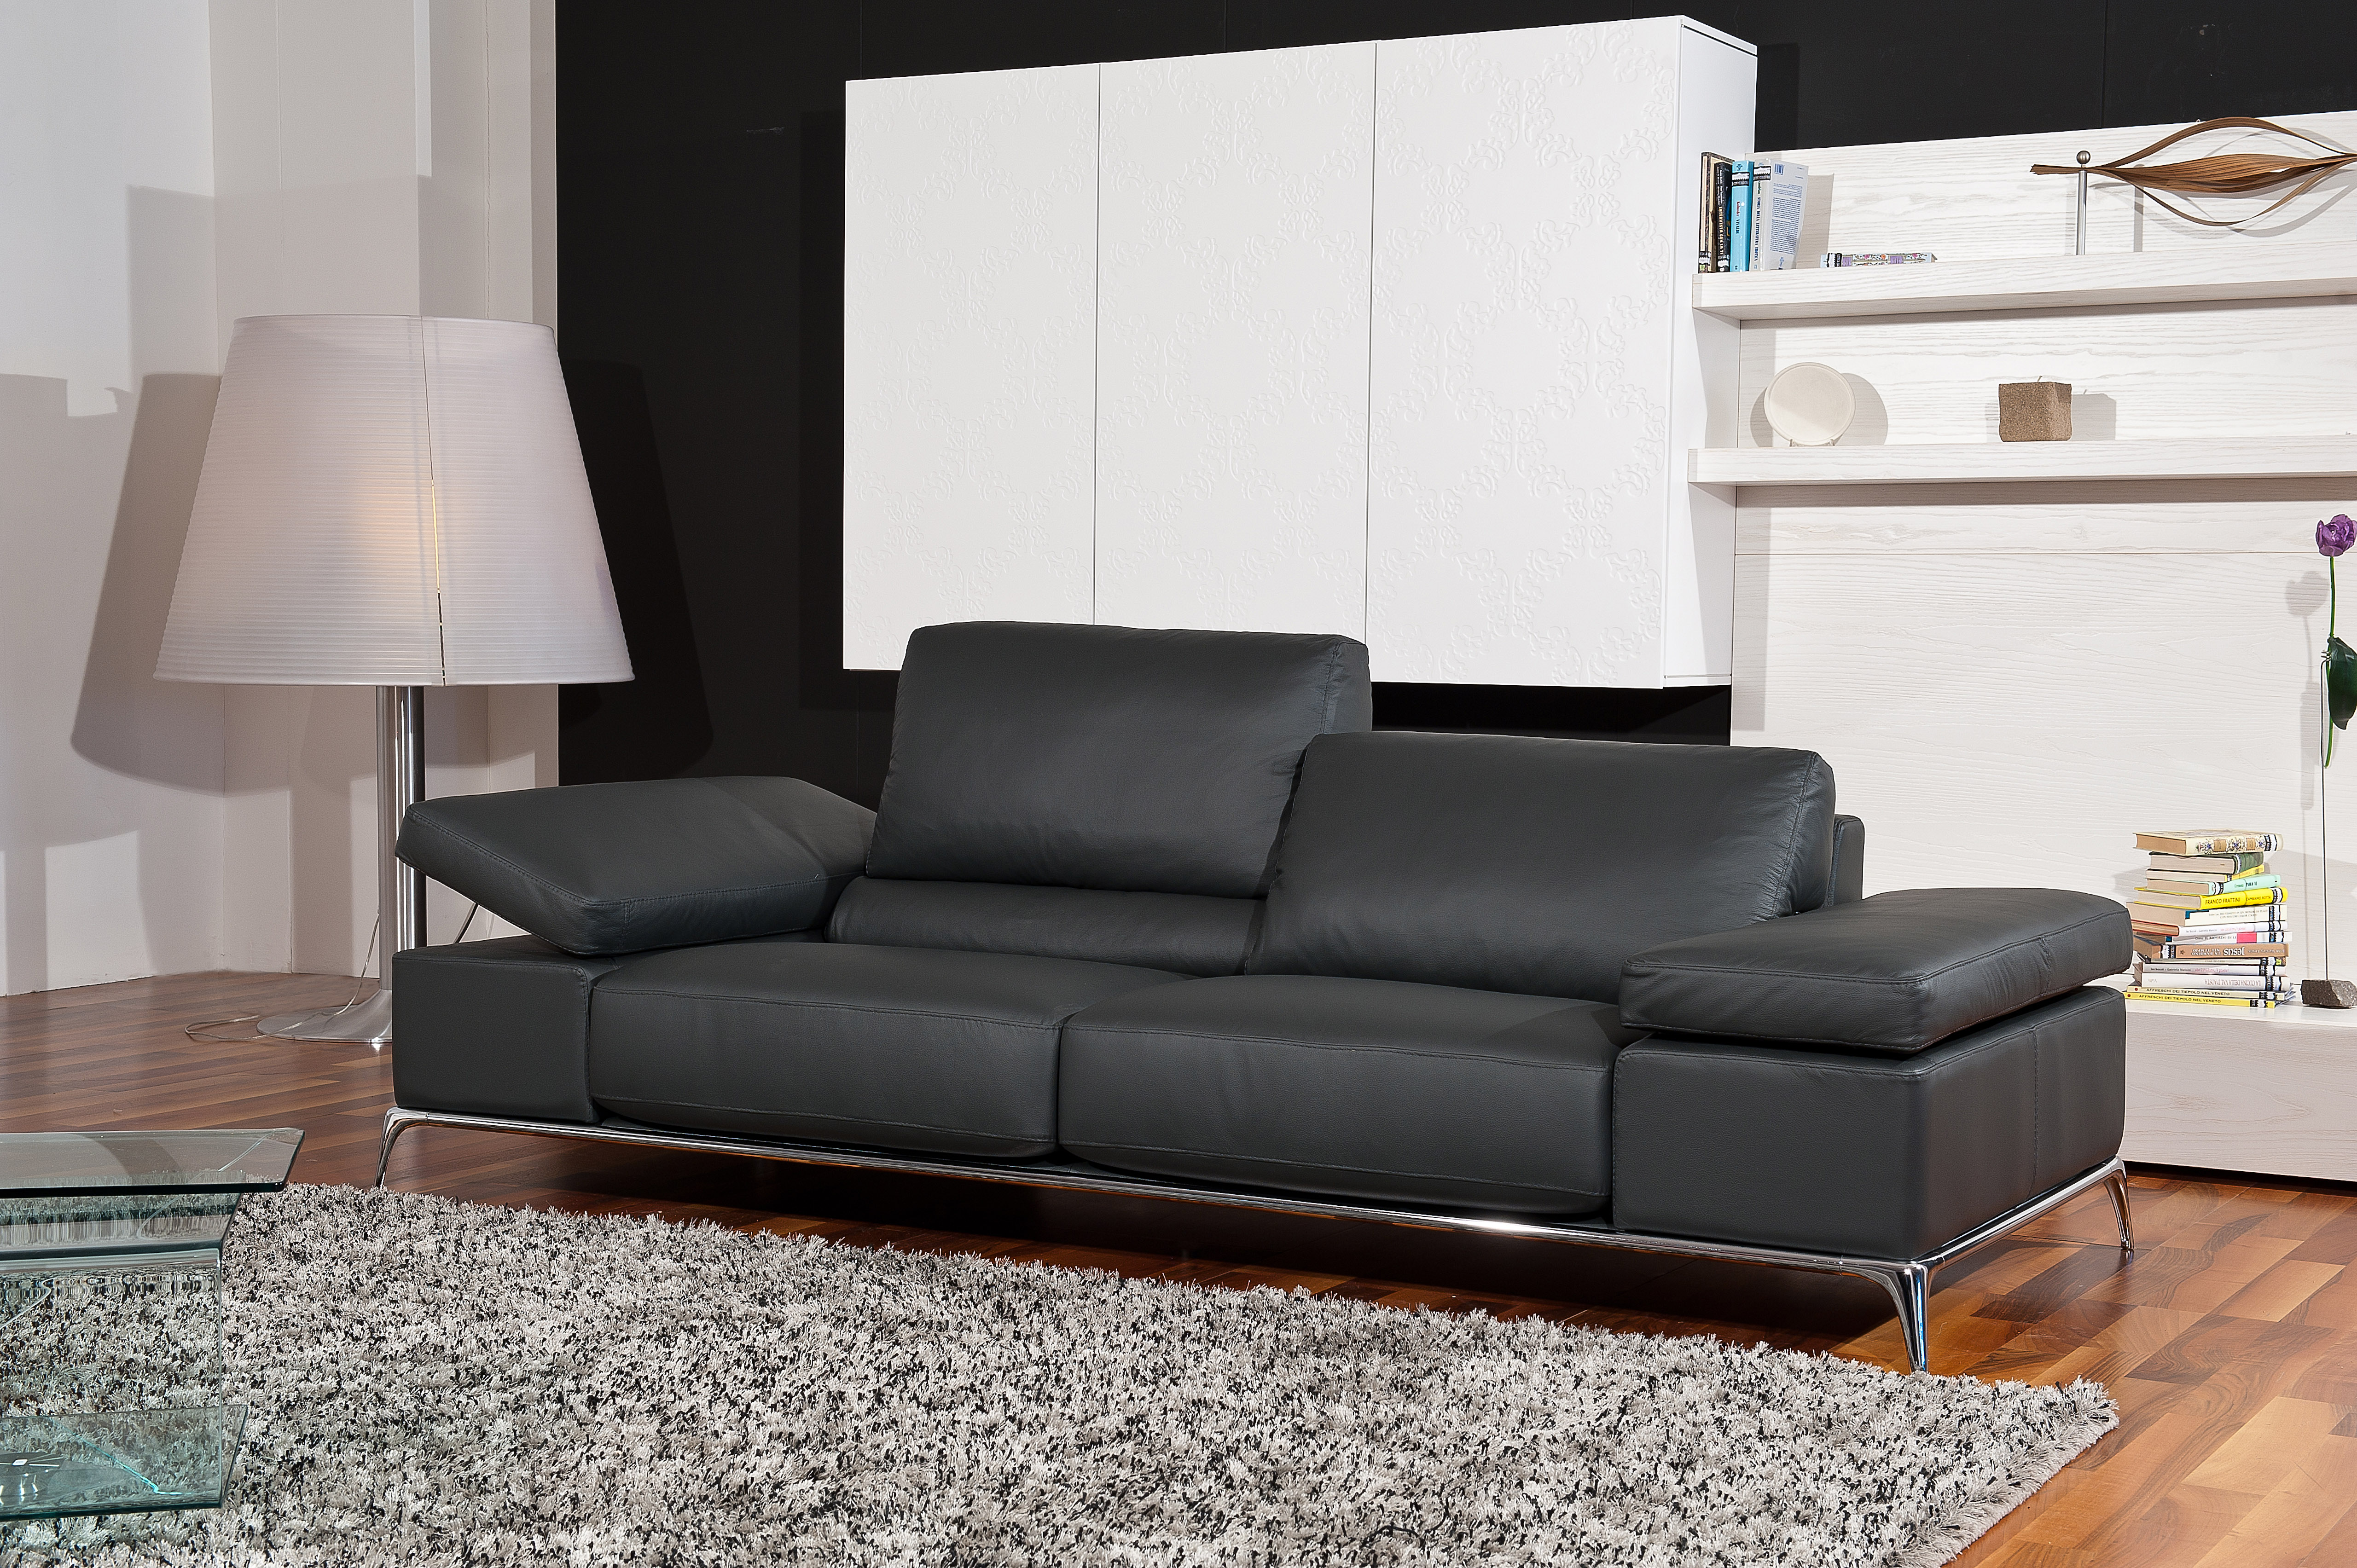 black leather sofa room design ideas